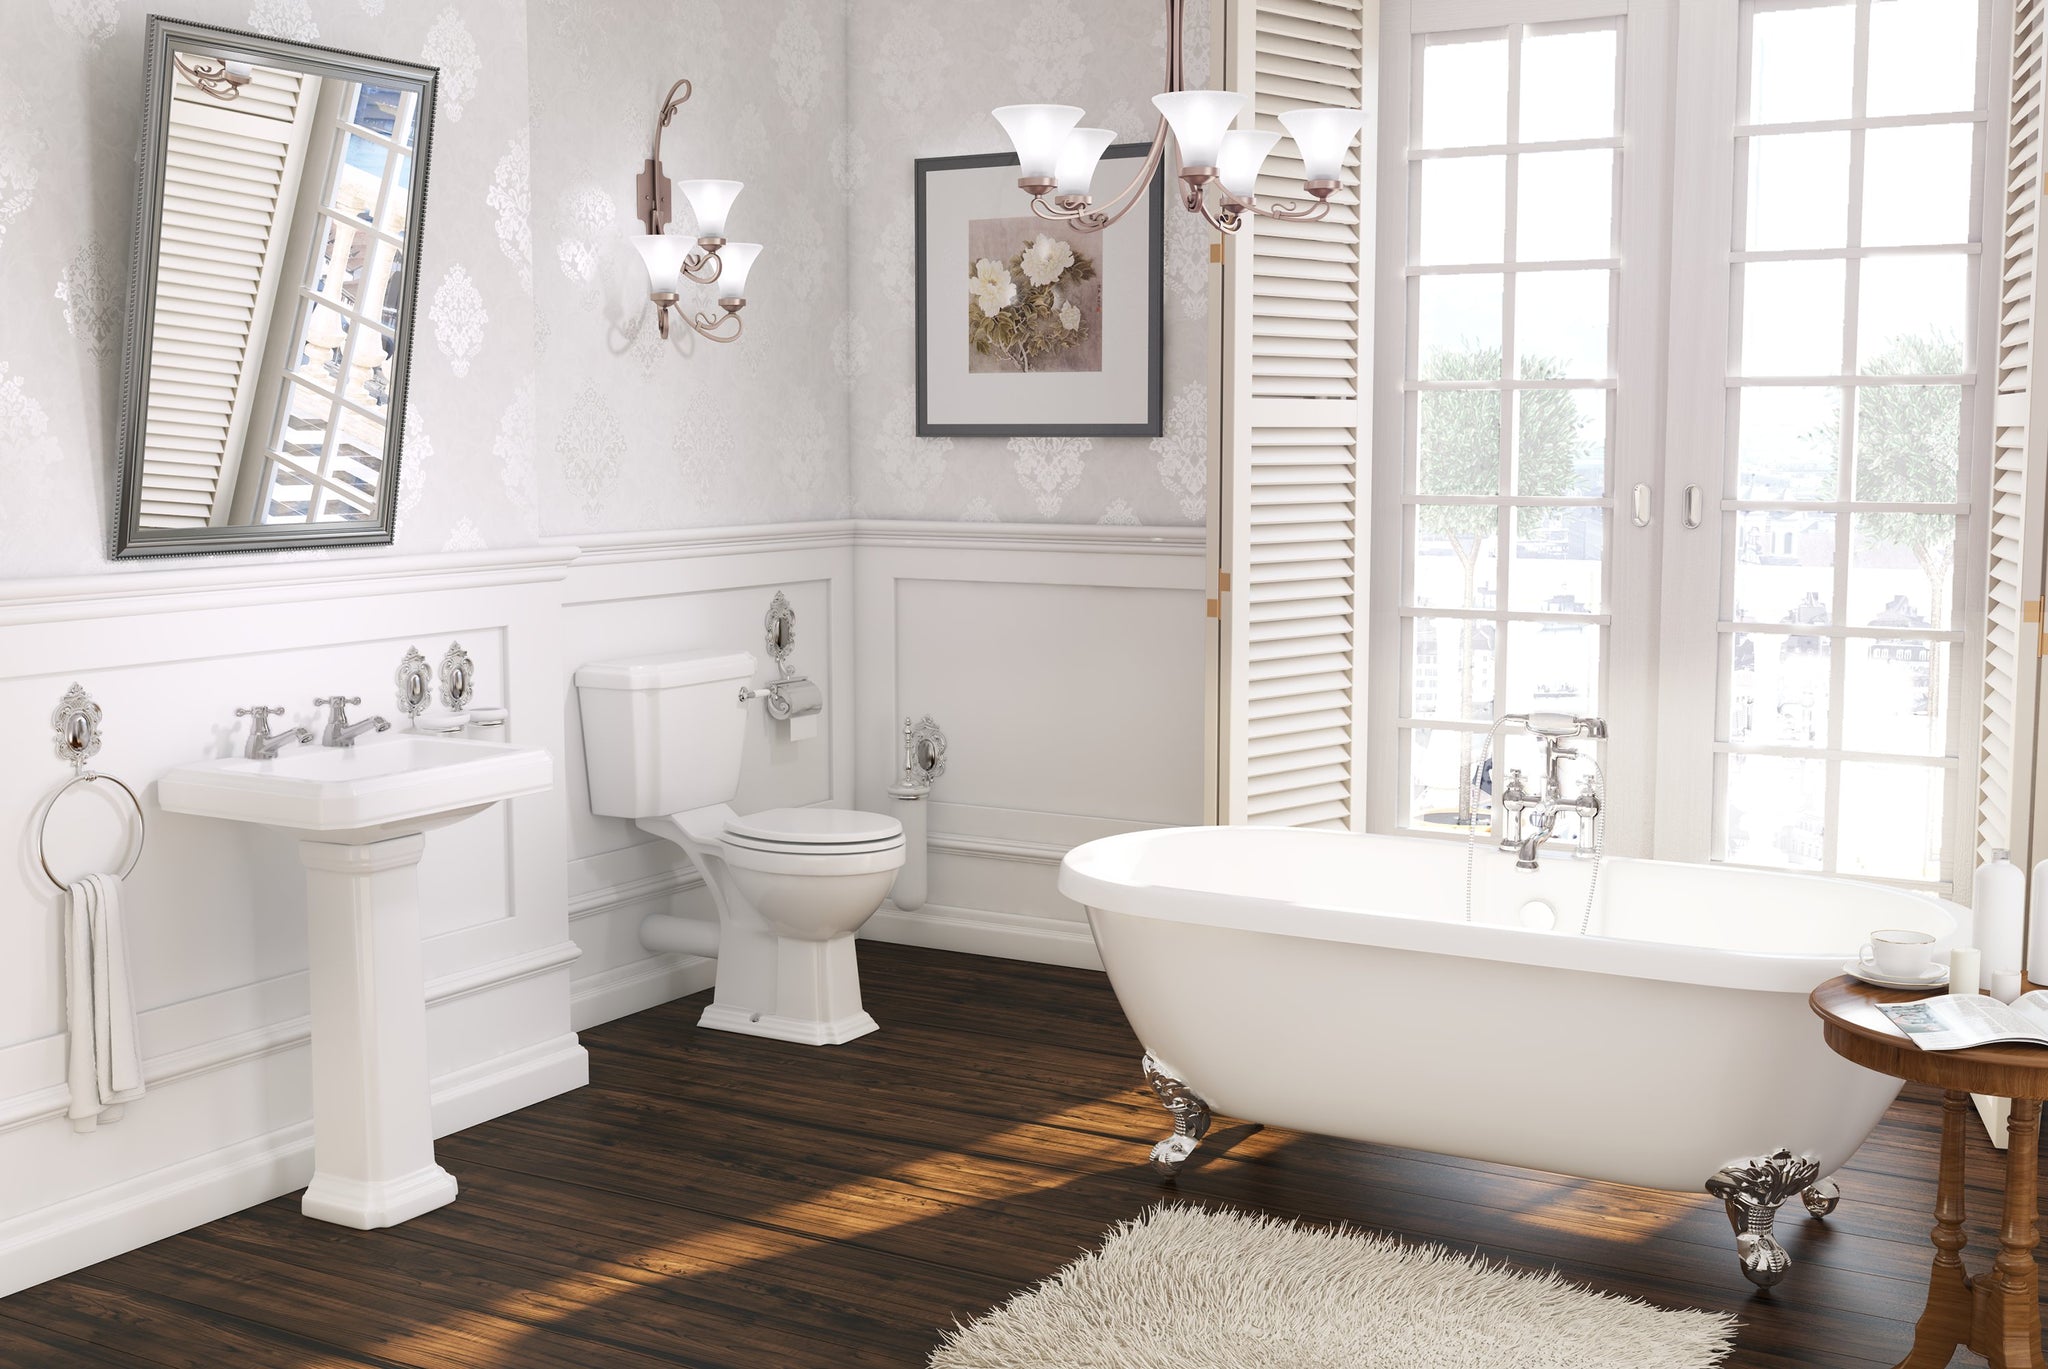 Modern bathroom suite with luxury fixtures and fittings - Keywords: bathroom suite design